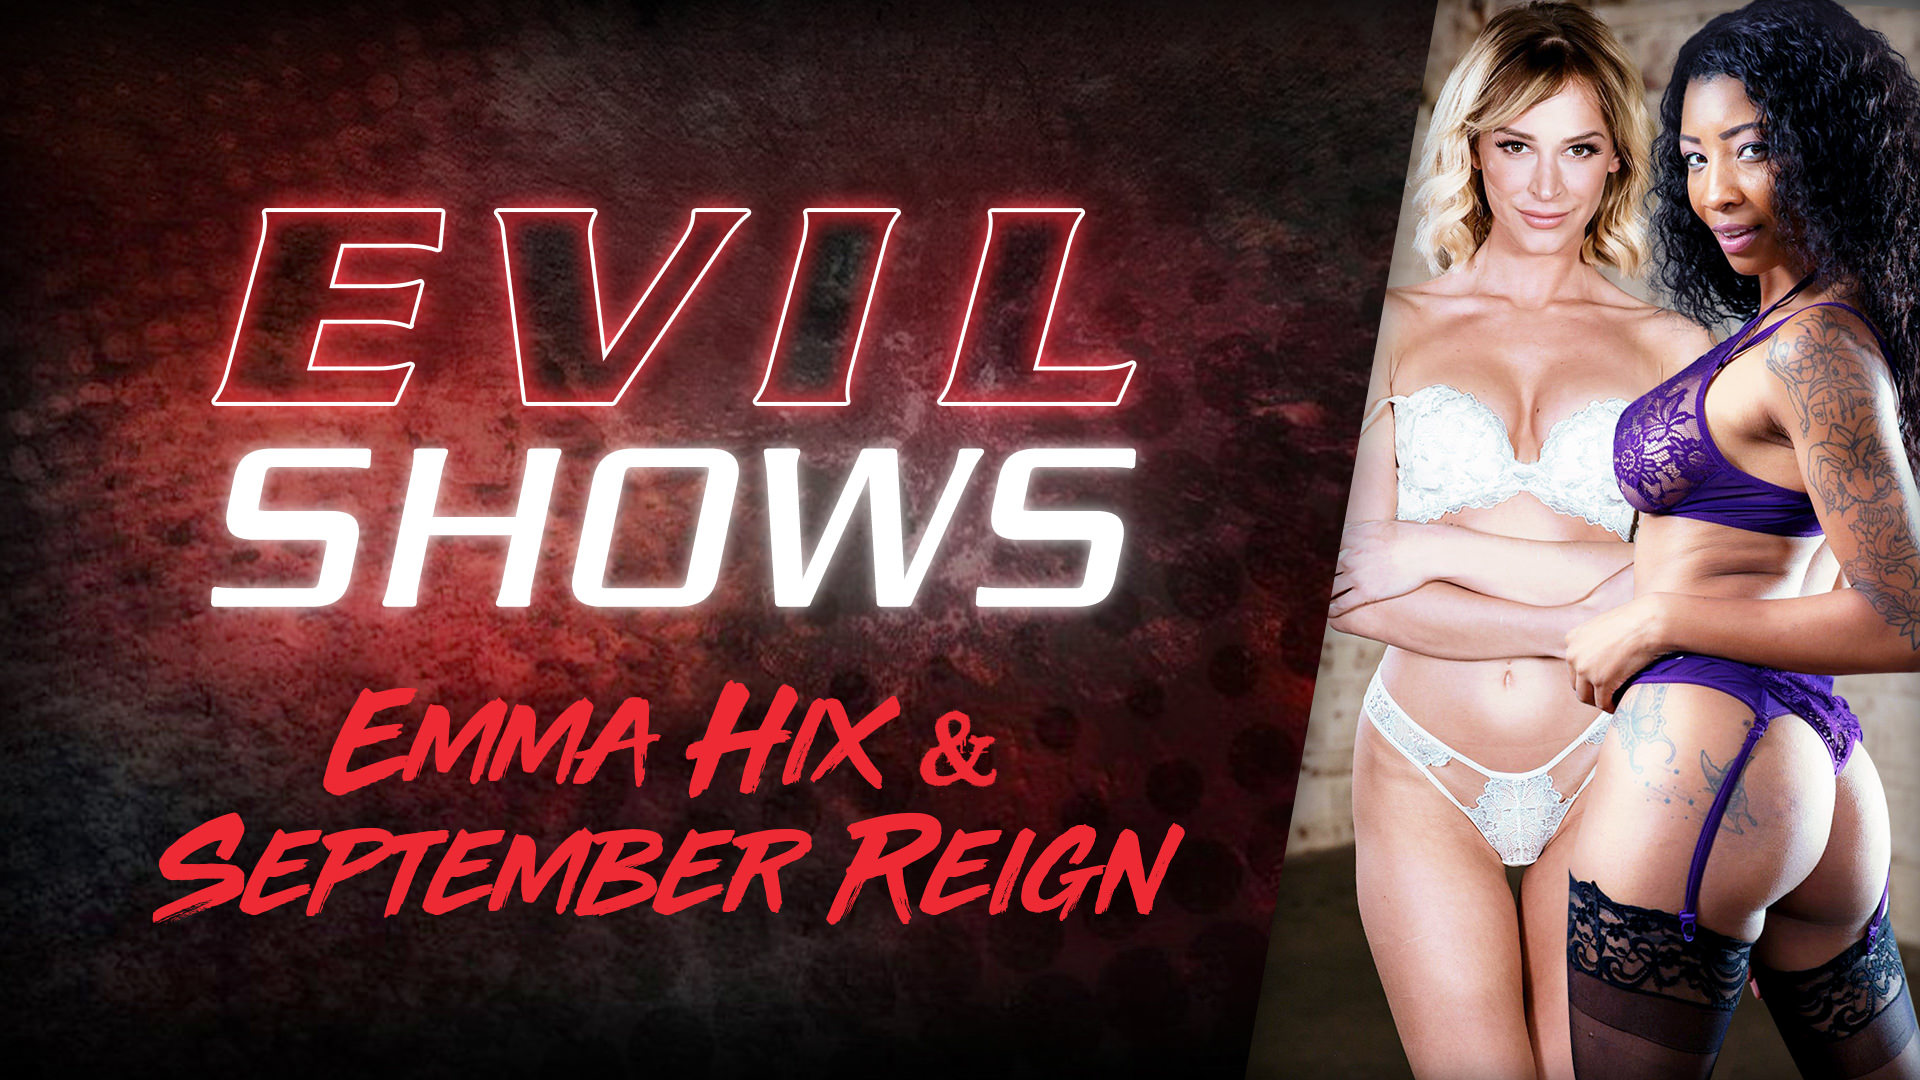 Evil Shows - Emma Hix & Septembe